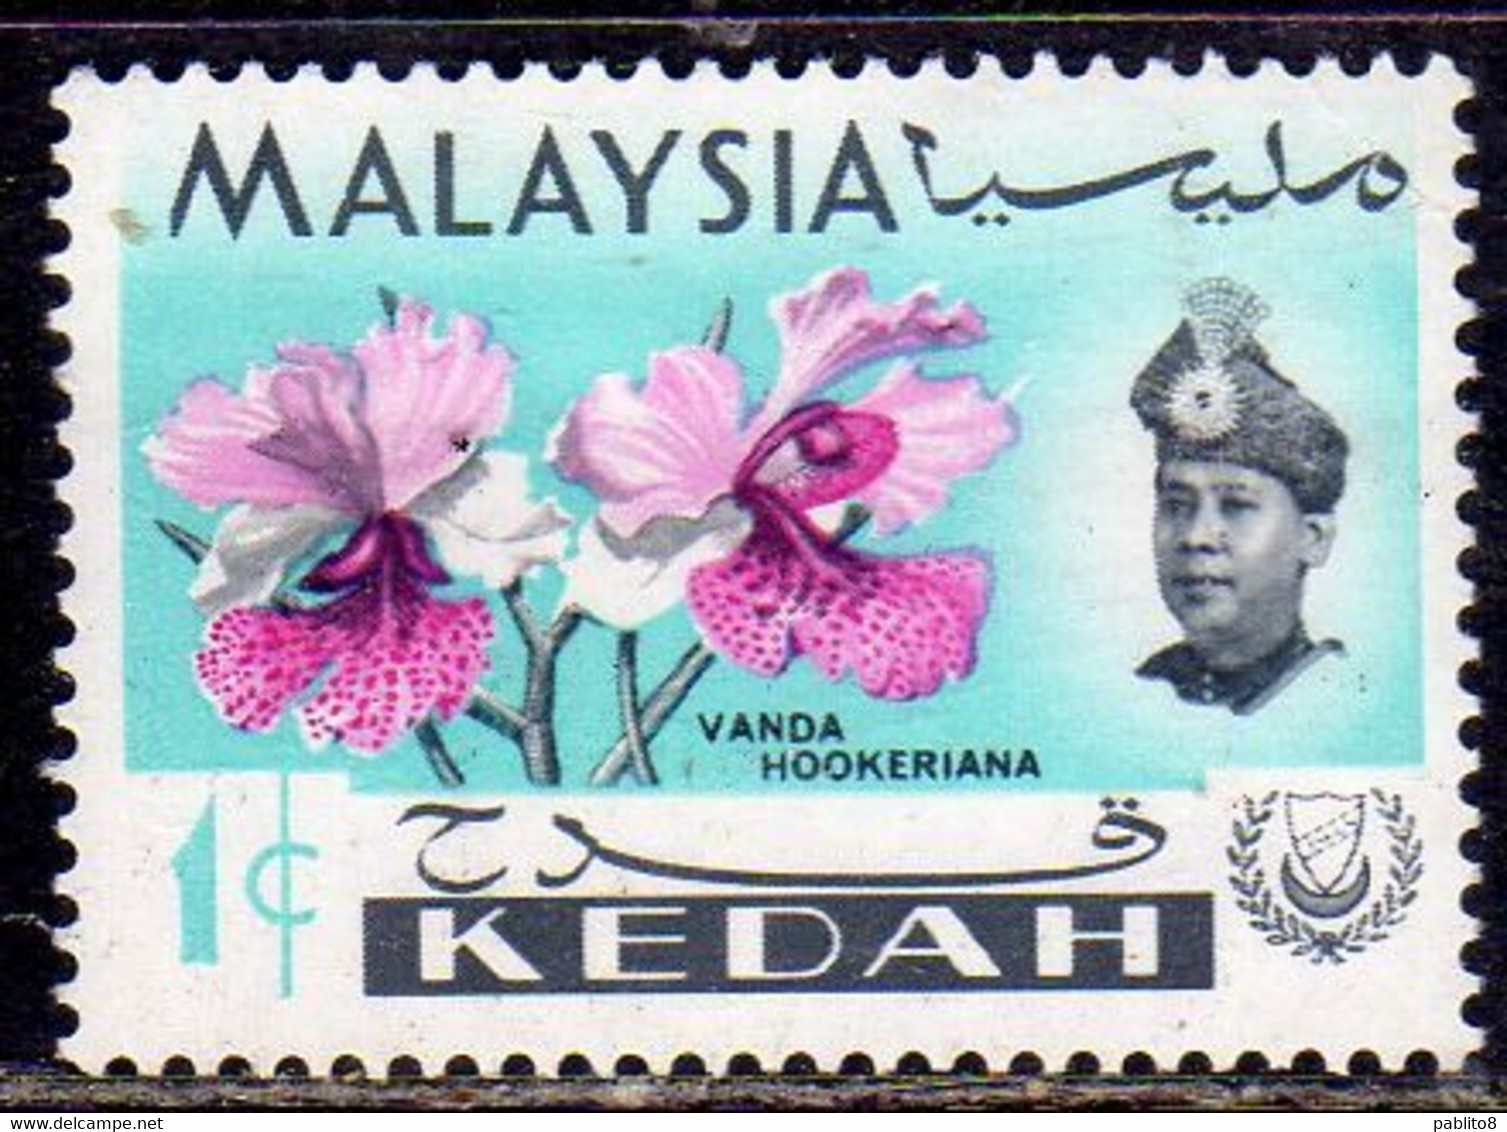 MALAYSIA MALESIA KEDAH MALAYA 1965 ORCHID WITH PORTRAIT OF SULTAN ABDUL HALIM CENT. 1c MNH - Kedah